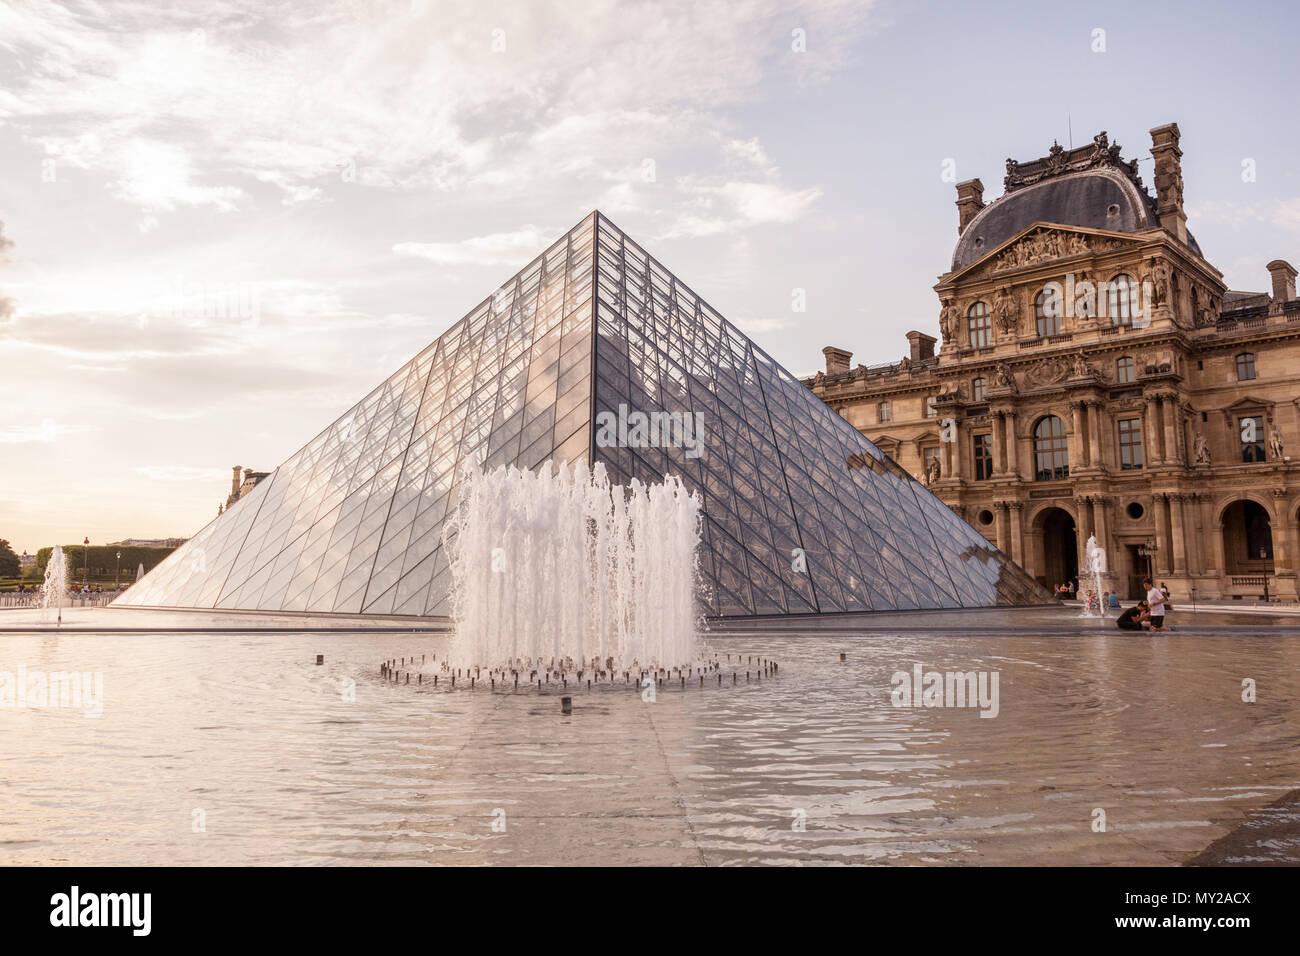 Museum du Louvre, Musée du Louvre and the glass pyramid, Paris, France, Europe. Stock Photo